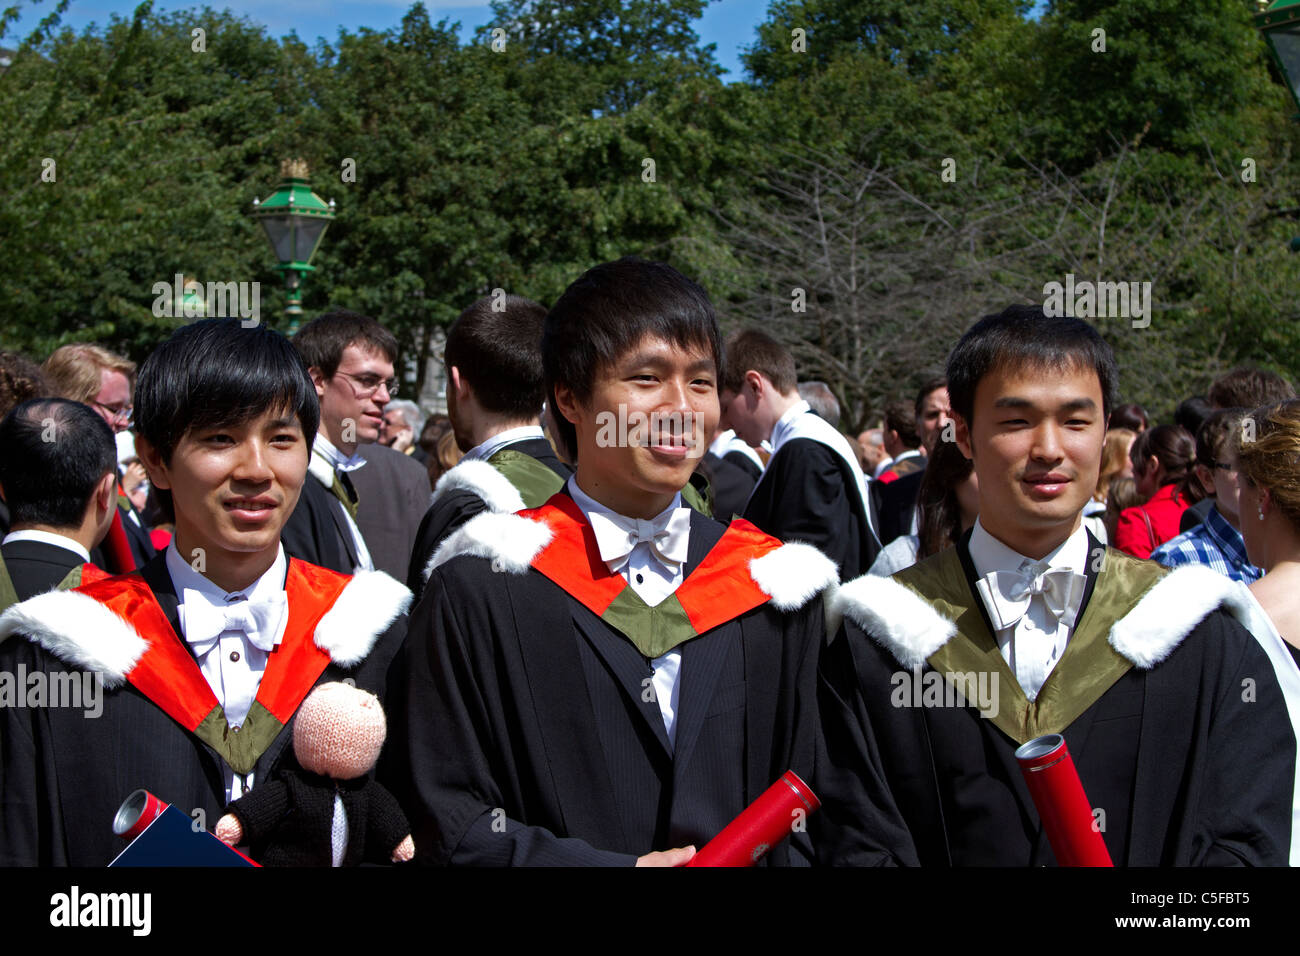 Three male foreign students Edinburgh University graduates in